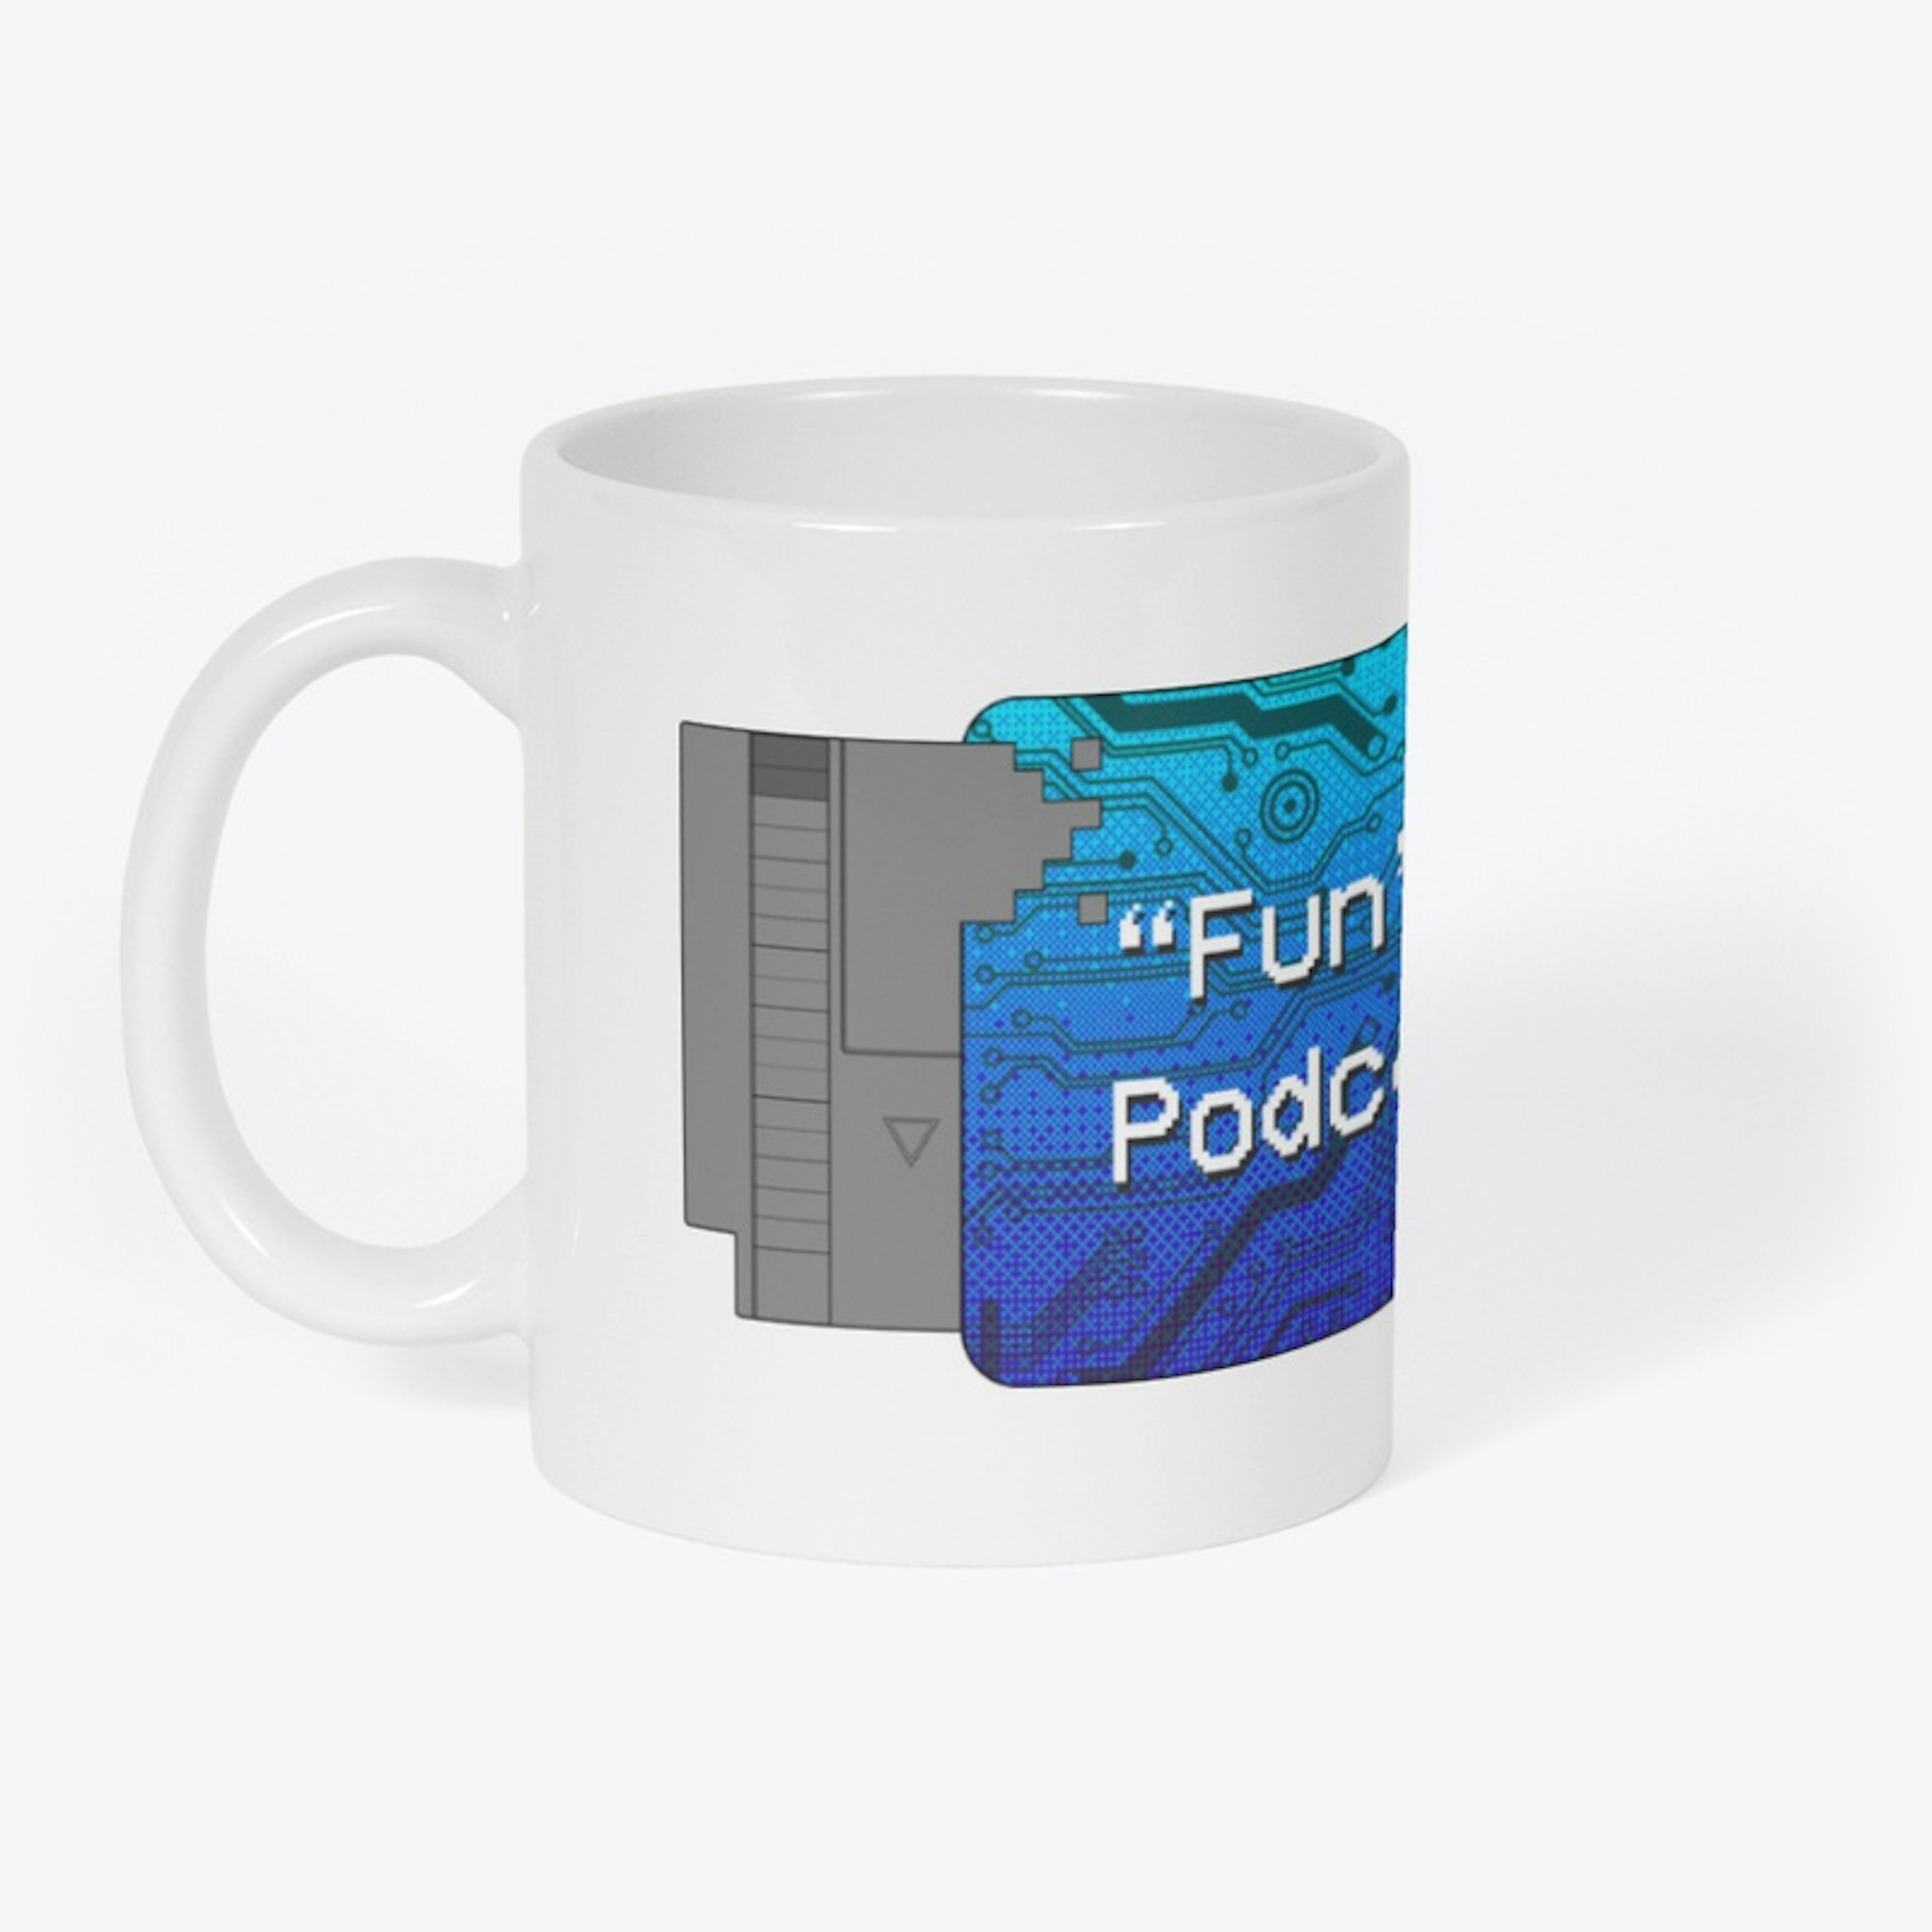 "Fun" & Games Mug